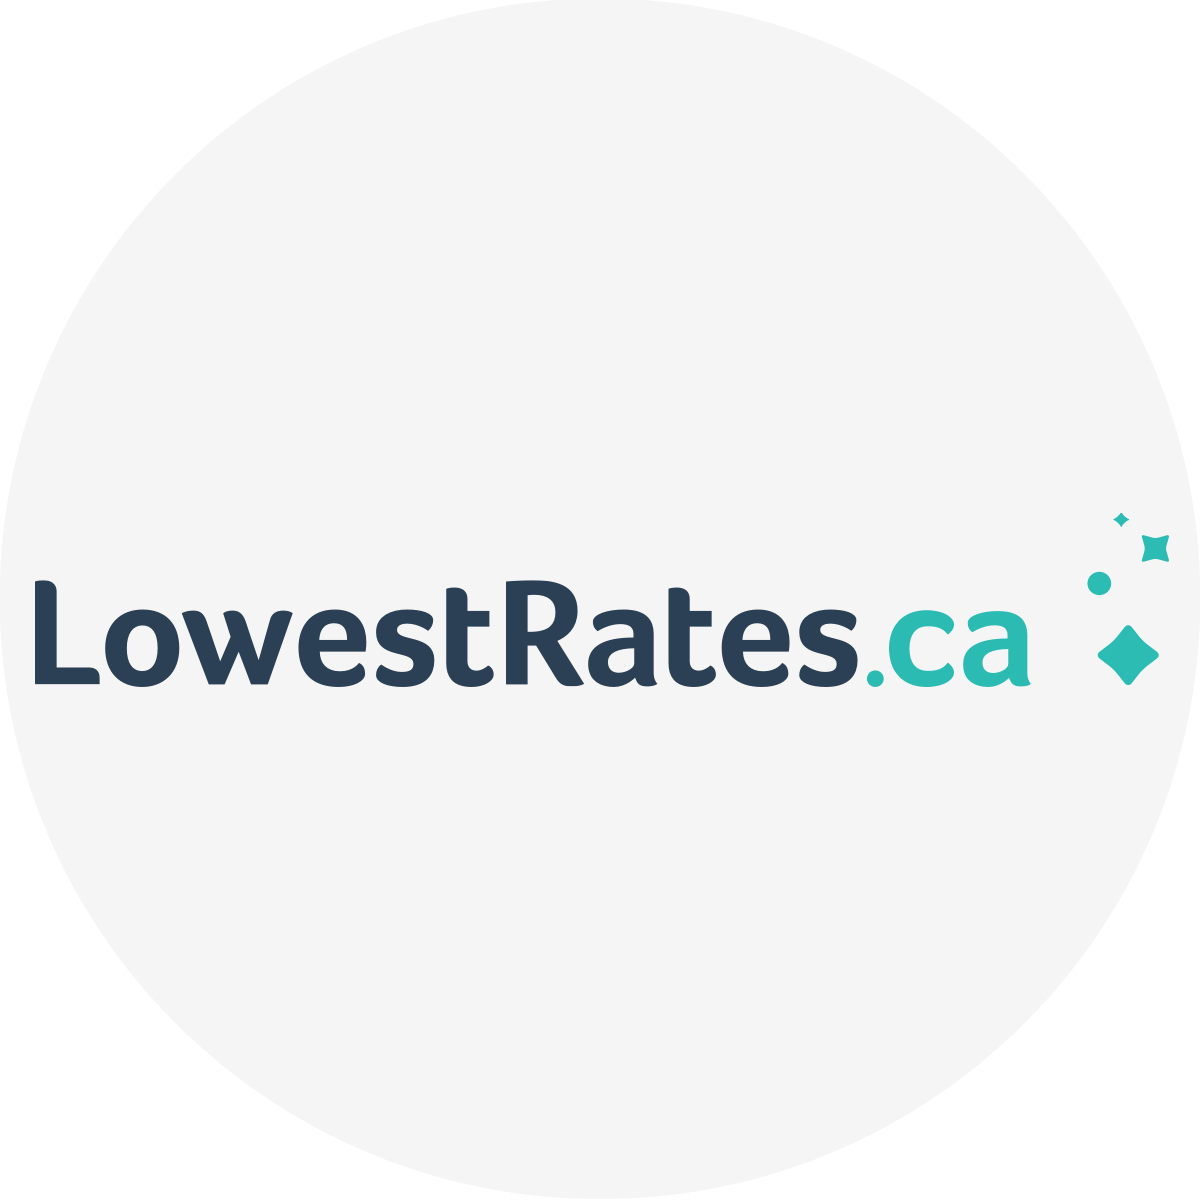 LowestRates.ca logo